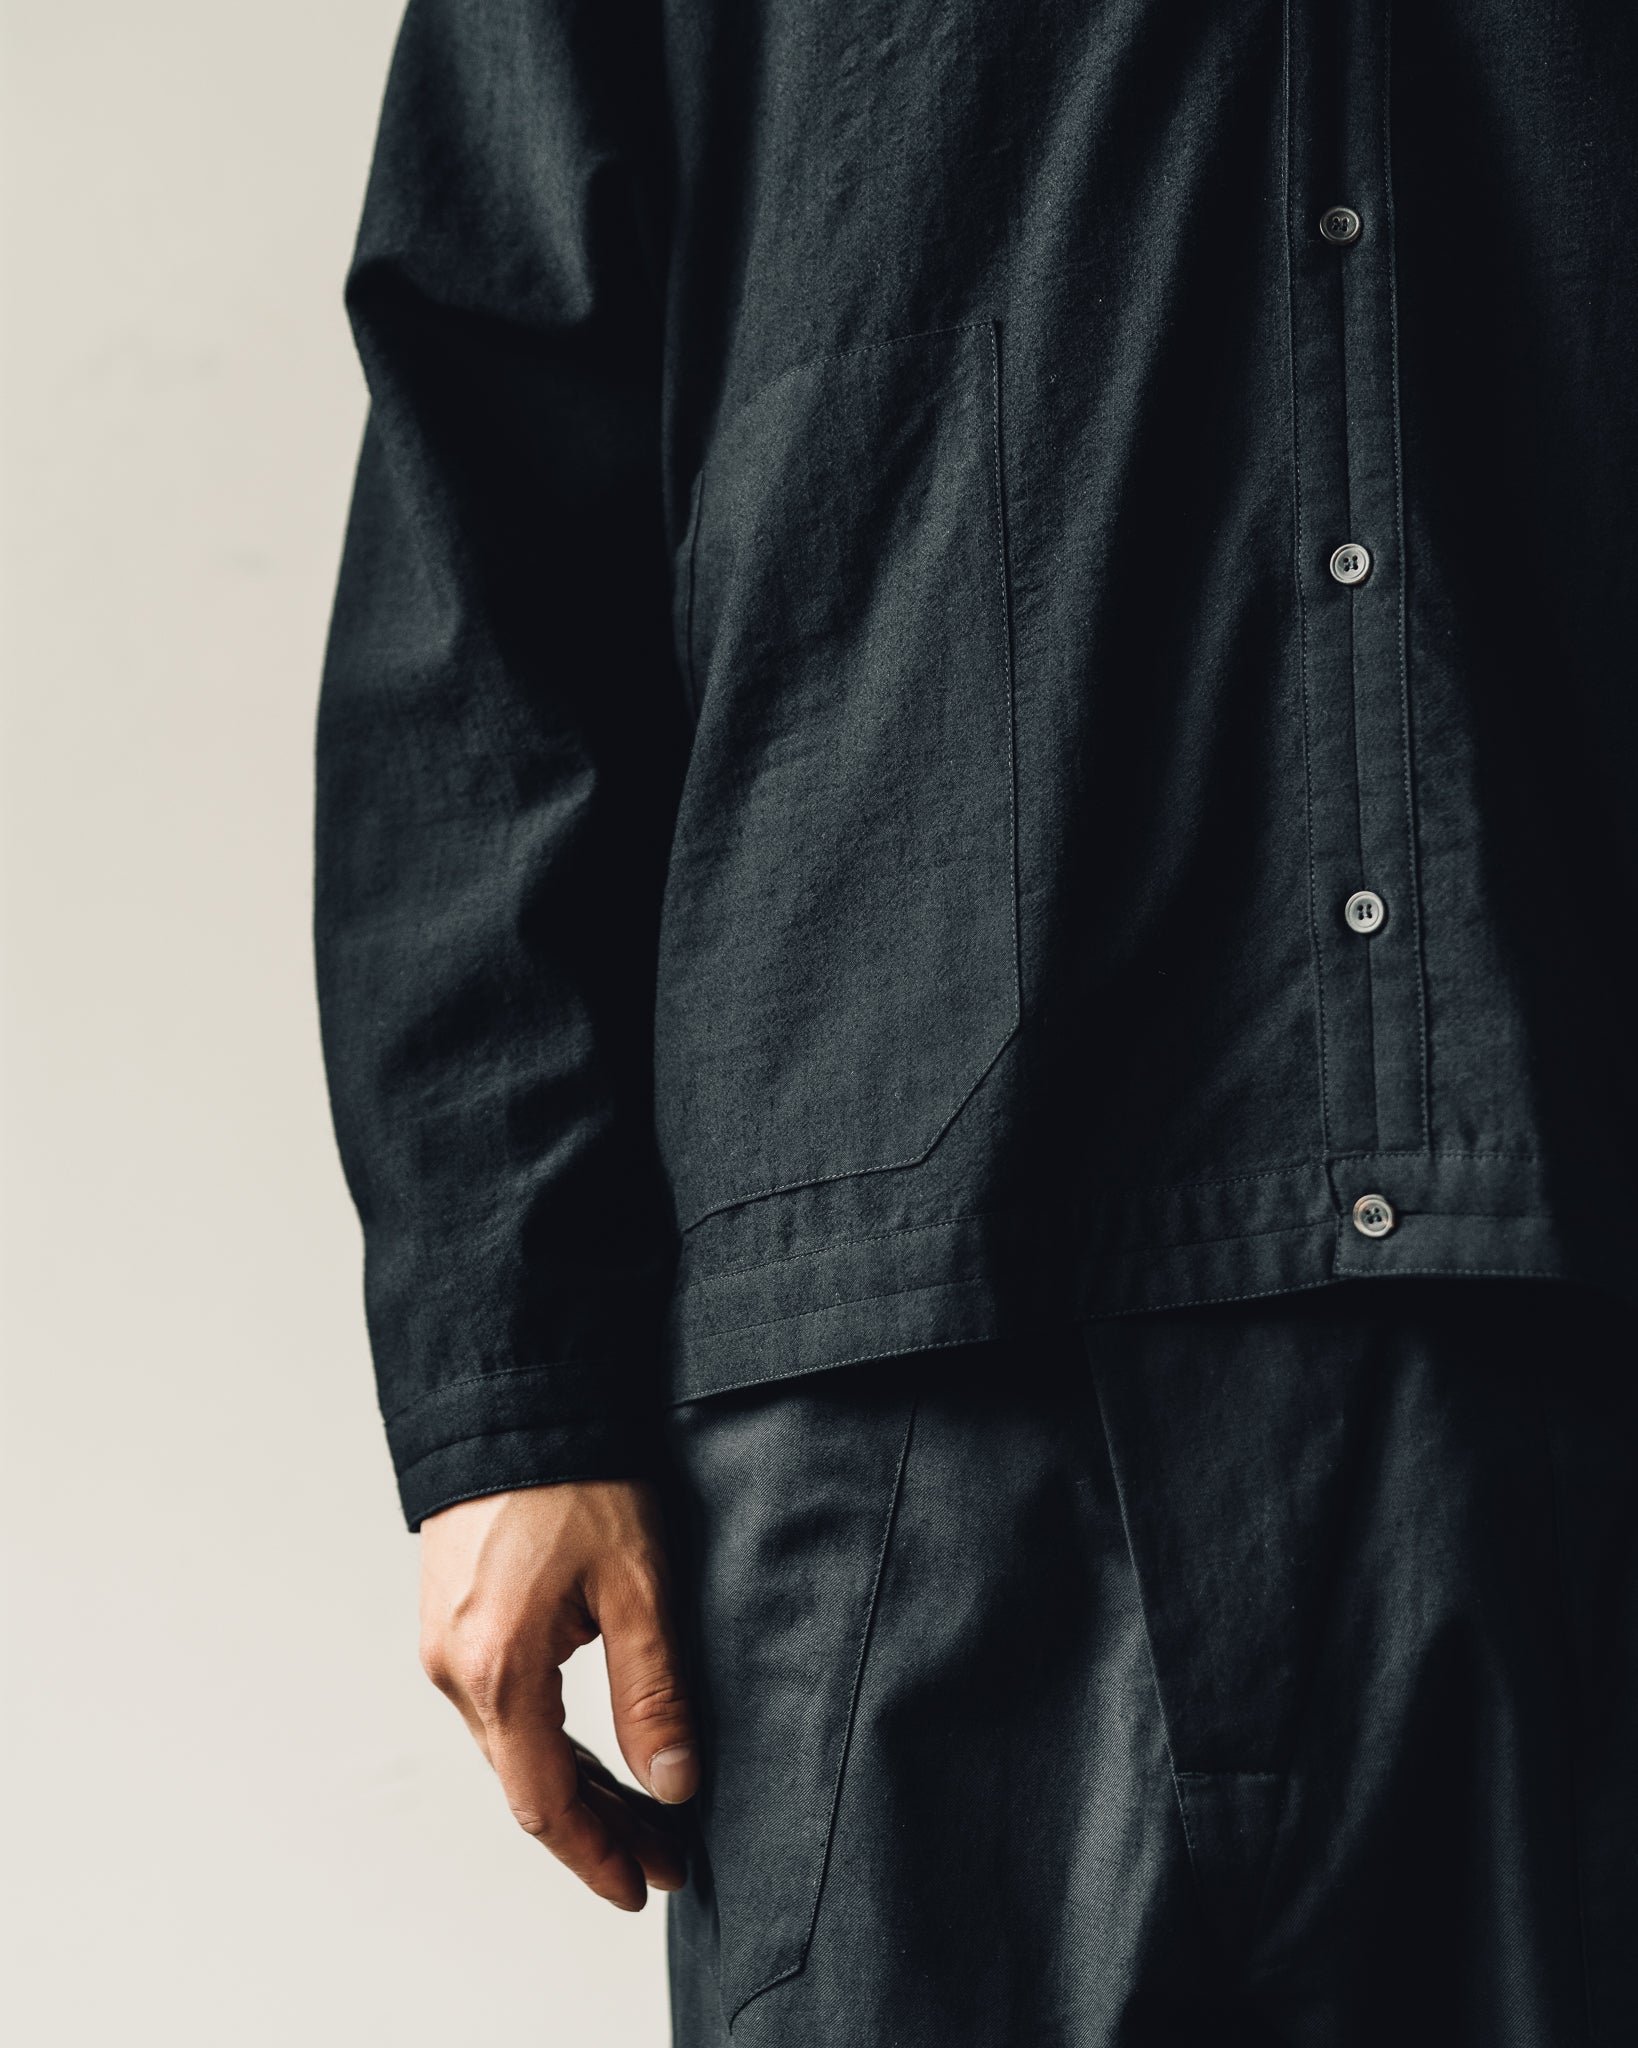 Jan-Jan Van Essche Shirt #72, Black Wool Flannel